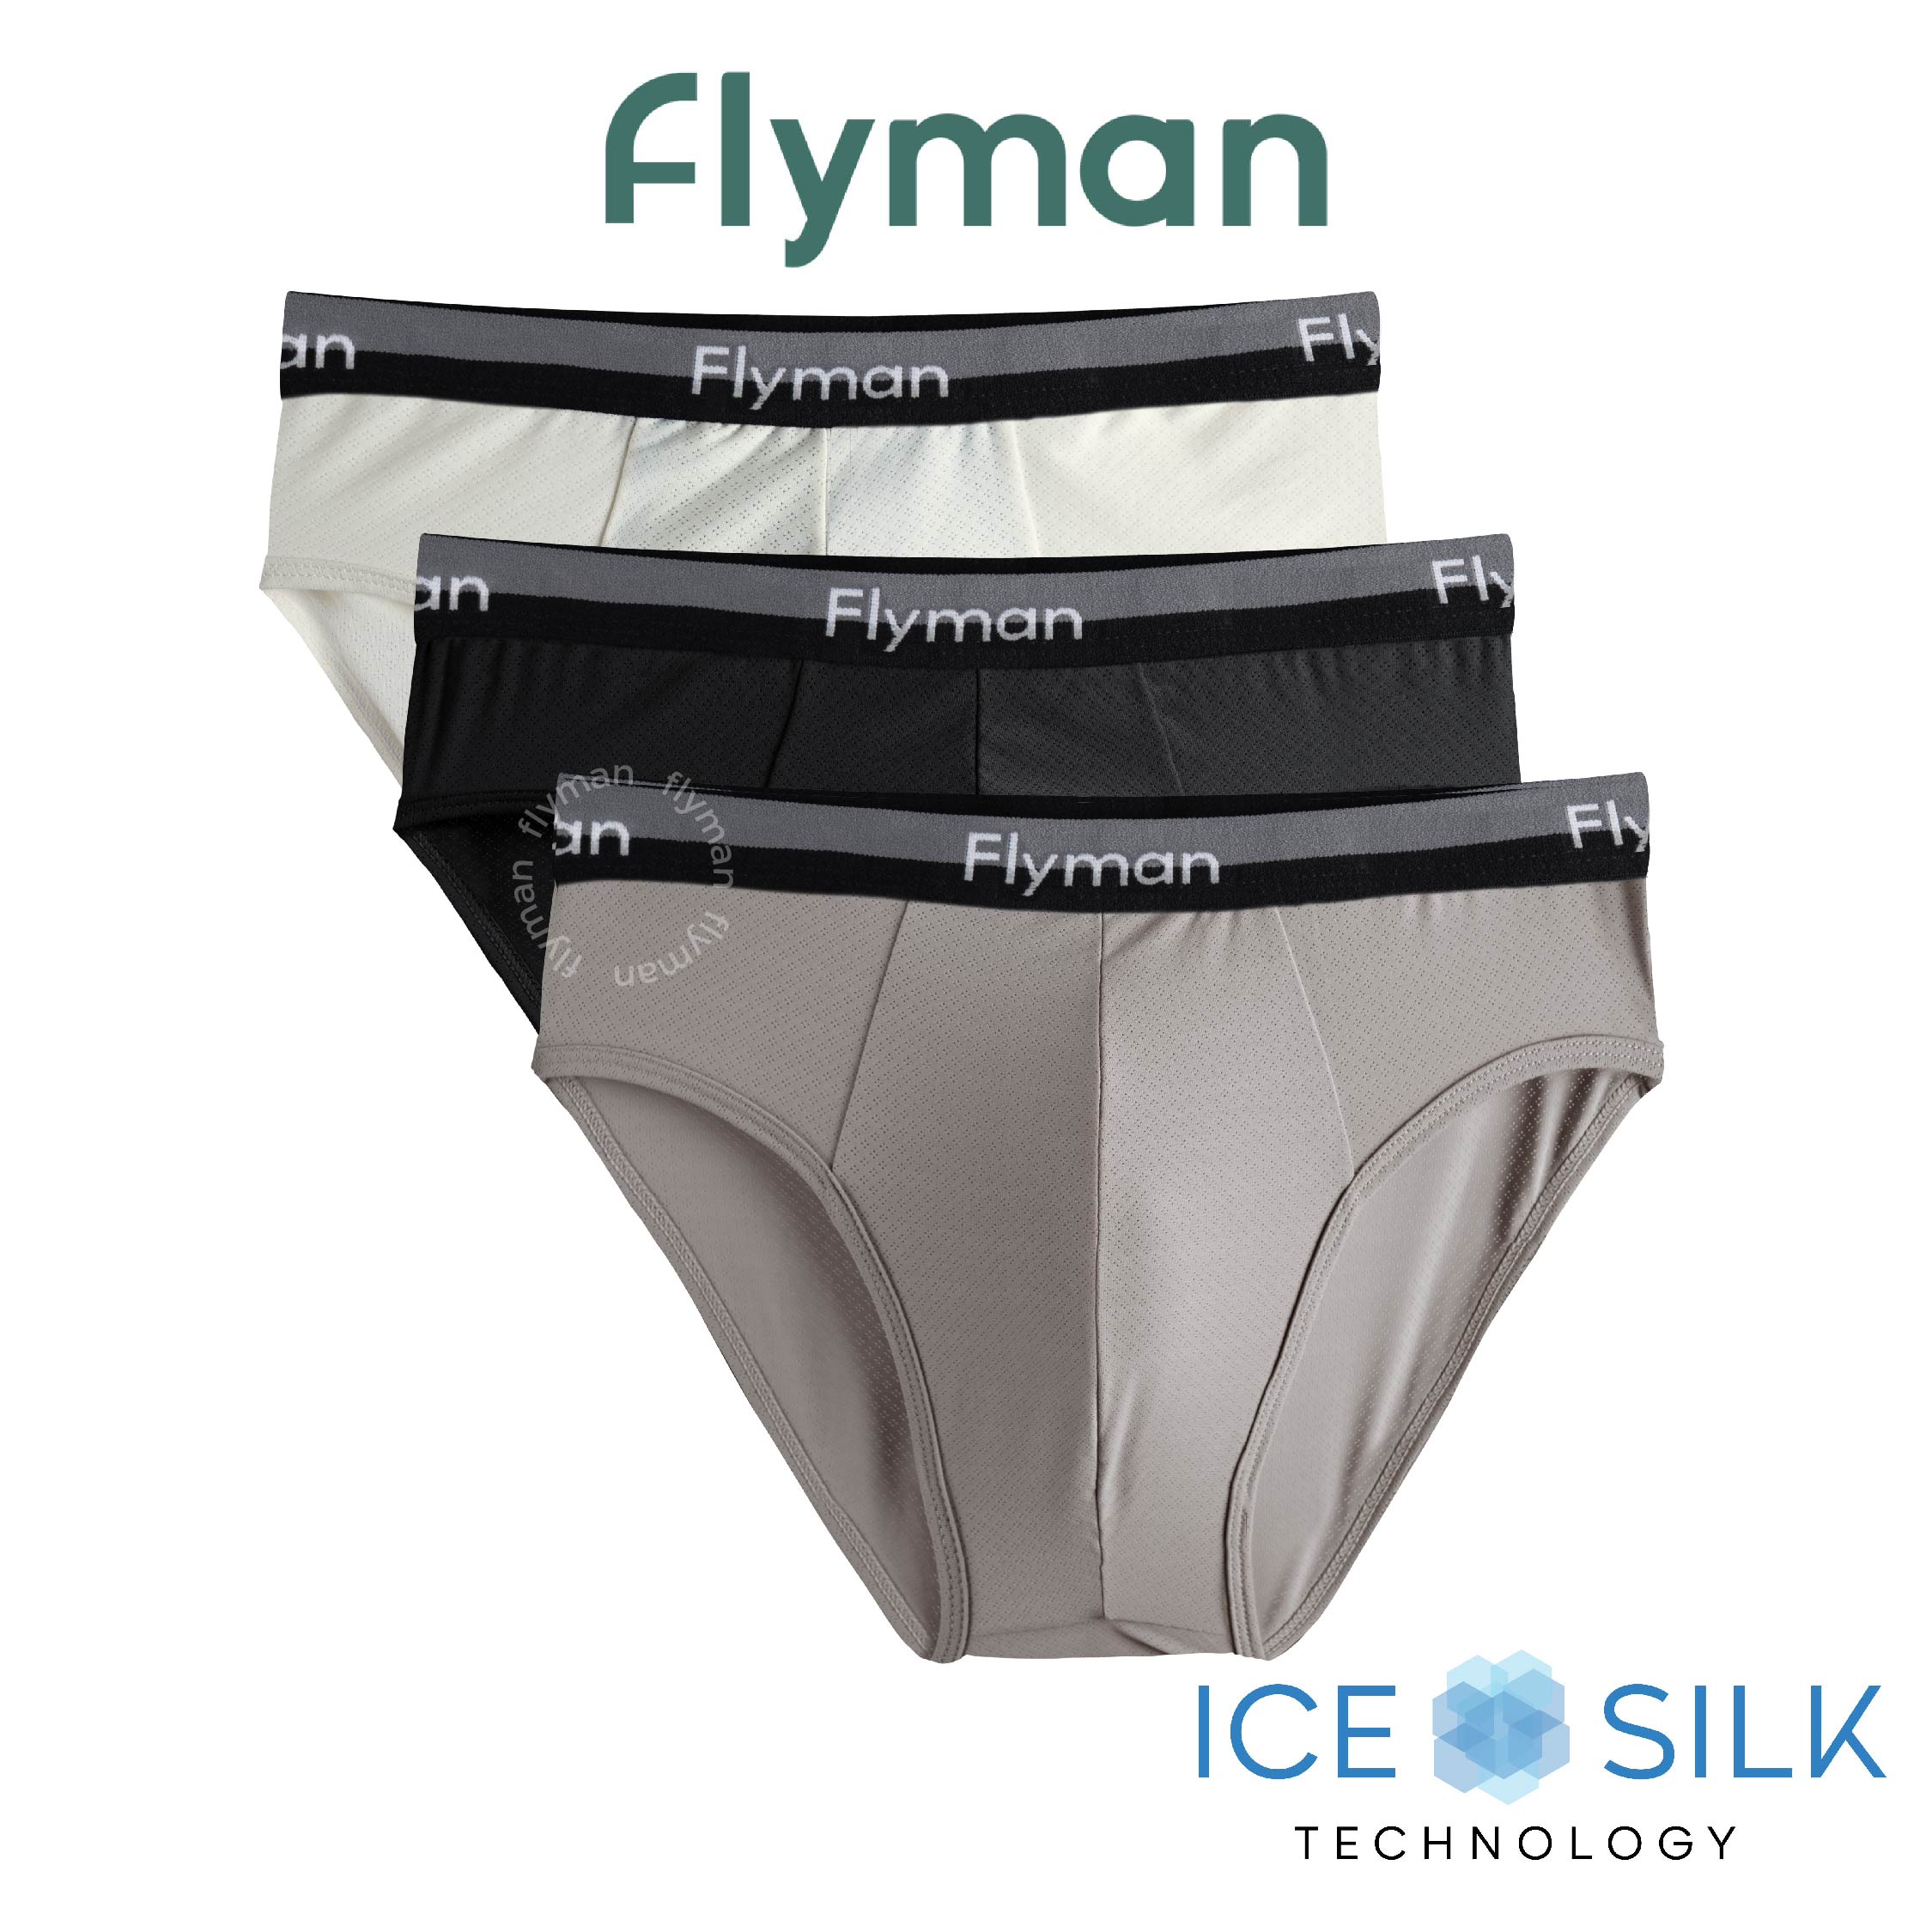 Flyman Celana Dalam Pria Briefs Micro Nylon FM 3455 1 Pcs